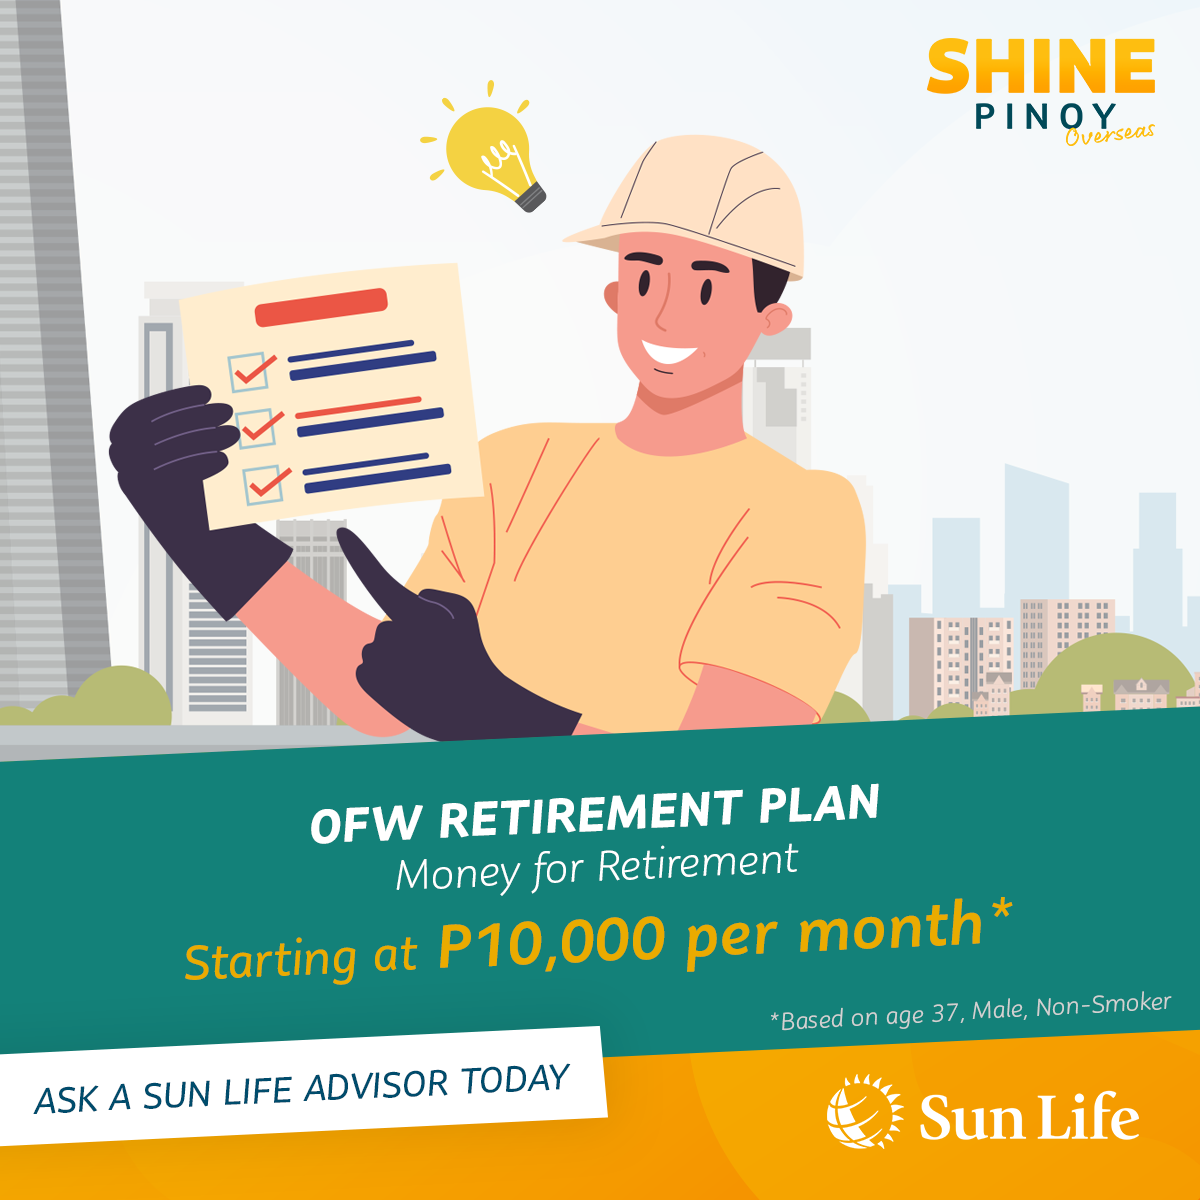 OFW Retirement Plan | Shine Pinoy Abroad